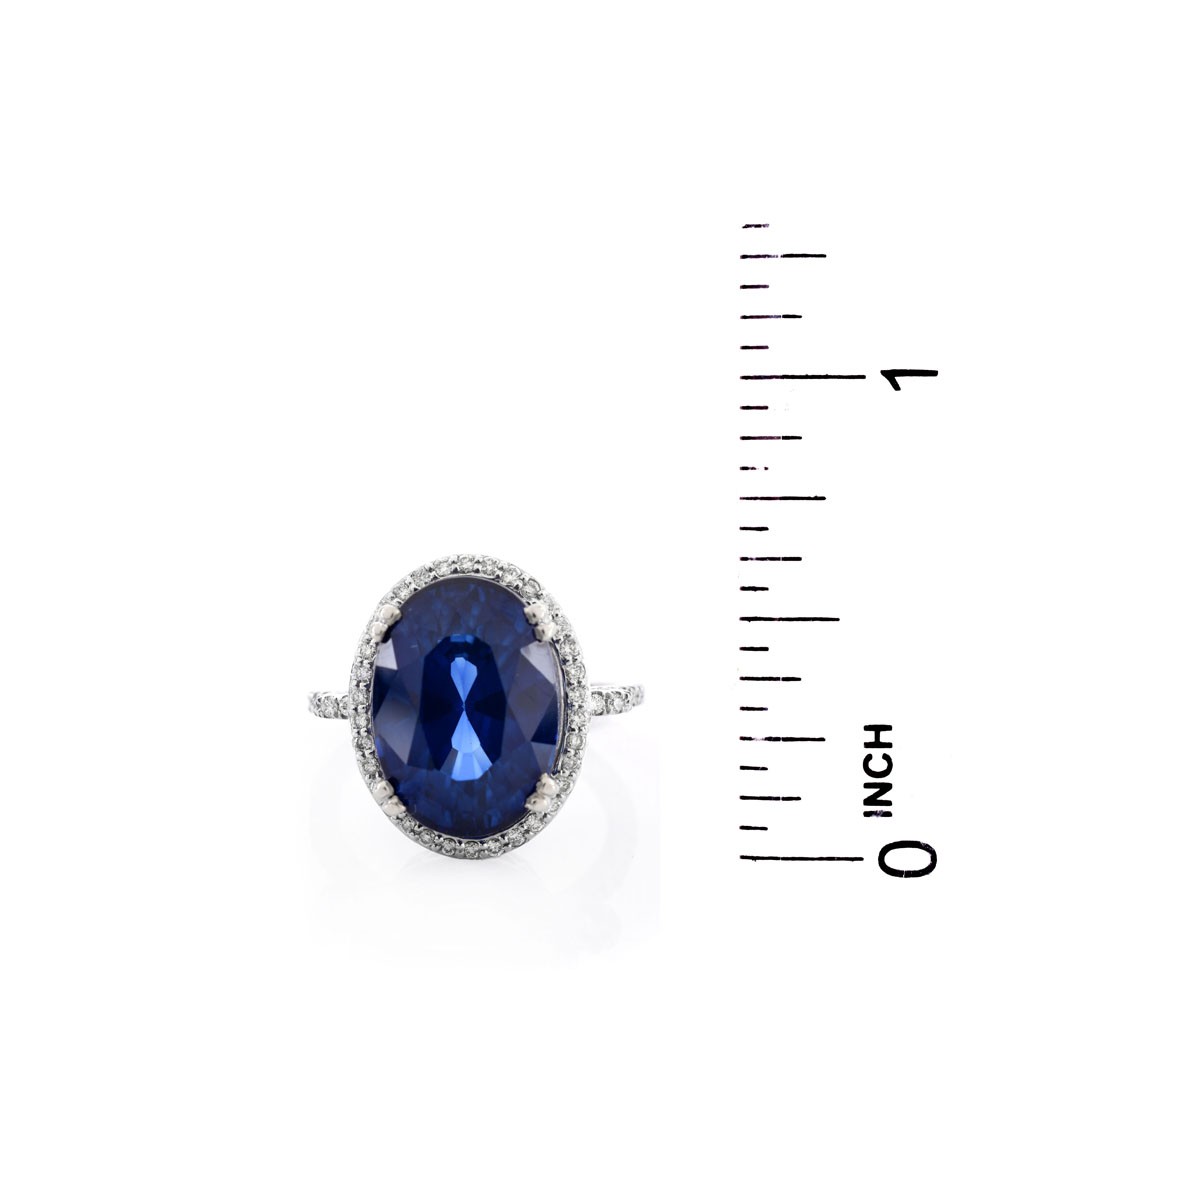 Oval Cut Sapphire, Diamond &14 Kt White Gold Ring